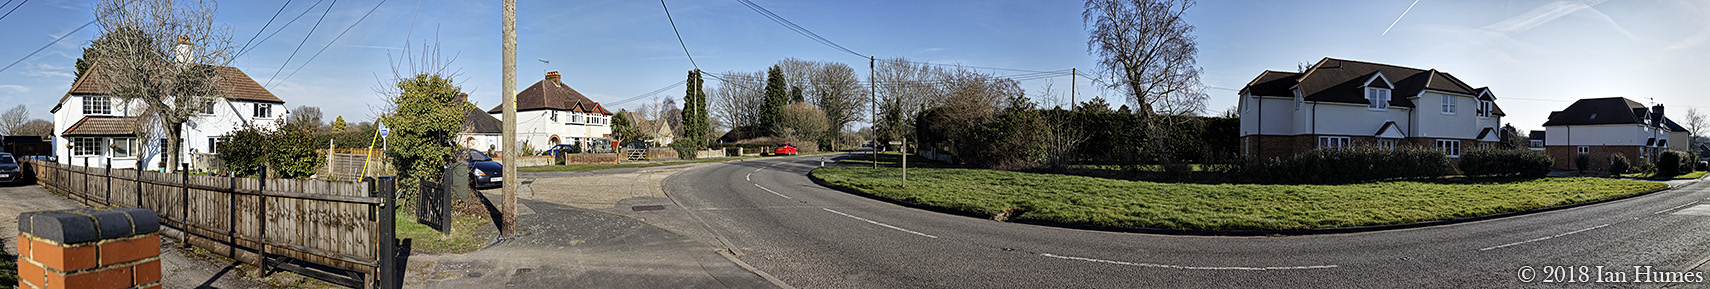 Poyle Road - Tongham